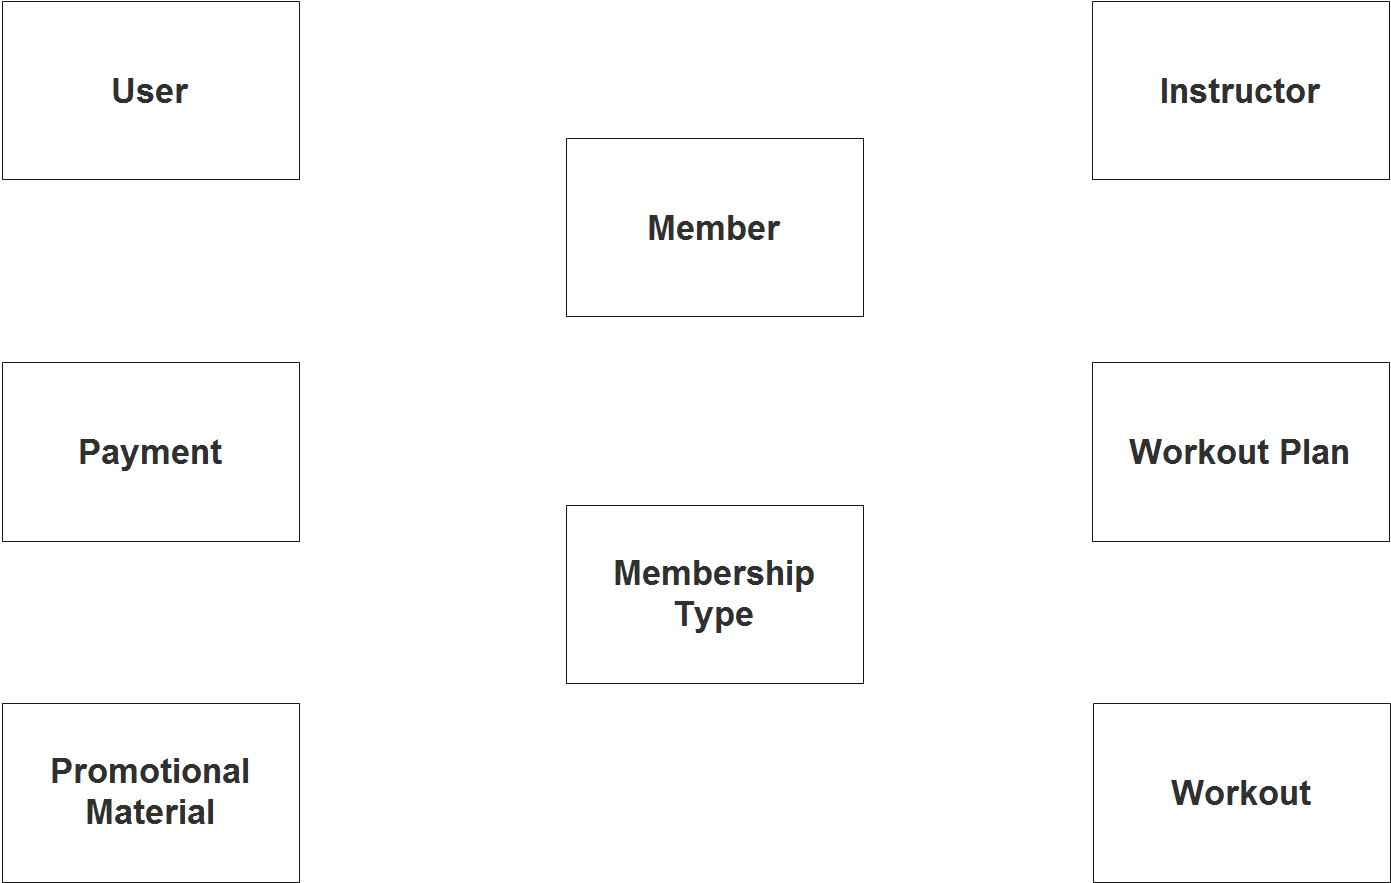 Gym Management System ER Diagram - Step 1 Identify Entities